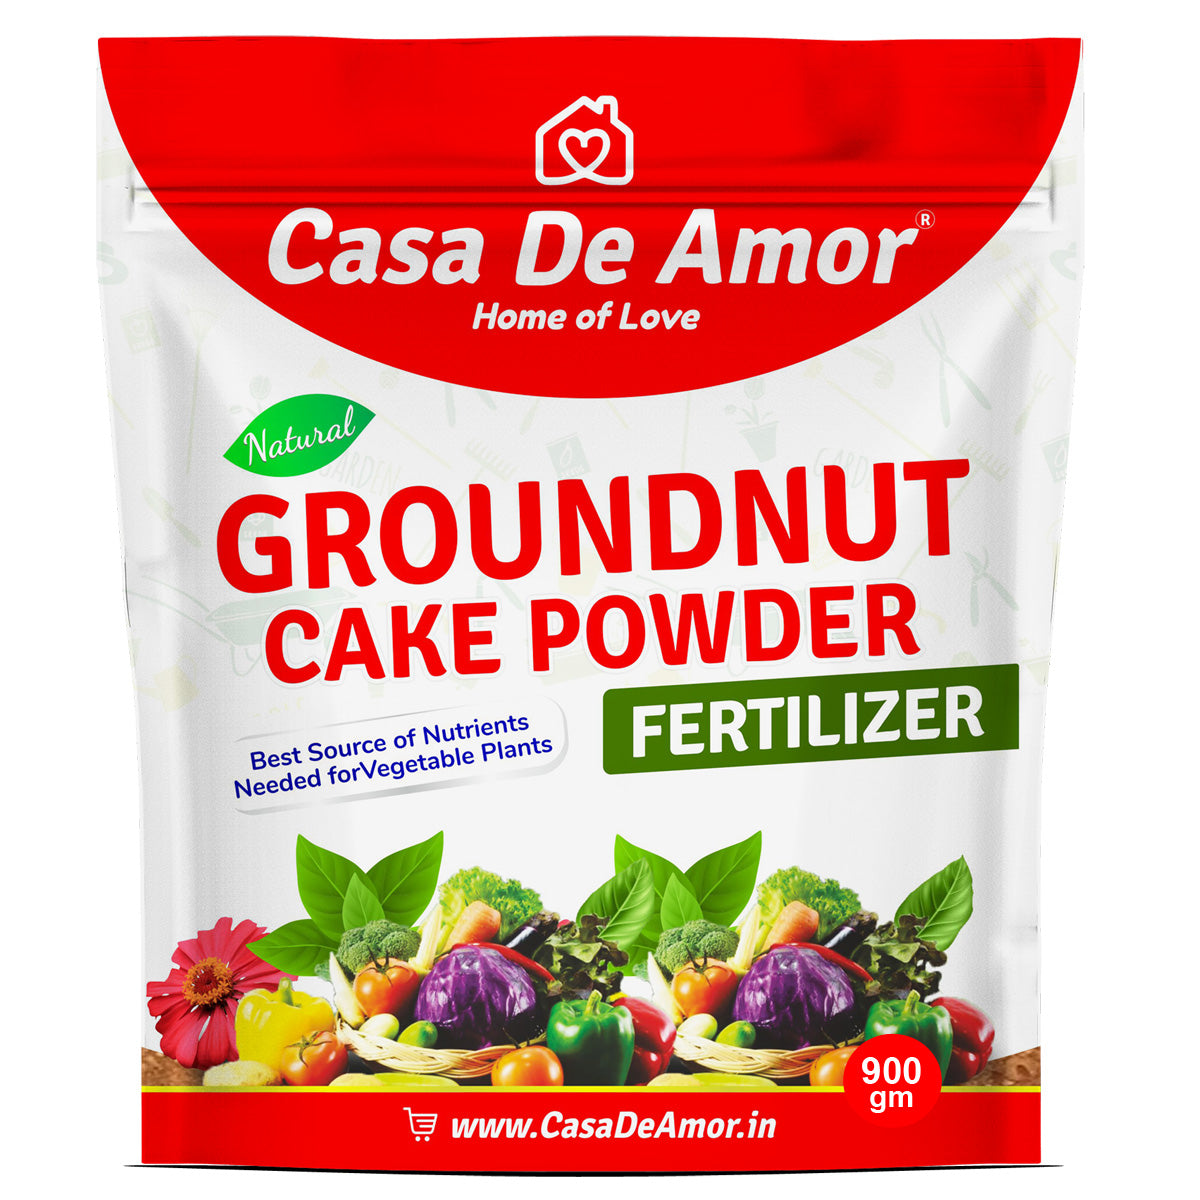 Casa De Amor Natural Groundnut Cake Powder Fertilizer for Home, Balcony, Terrace & Outdoor Gardening (900 Gm)